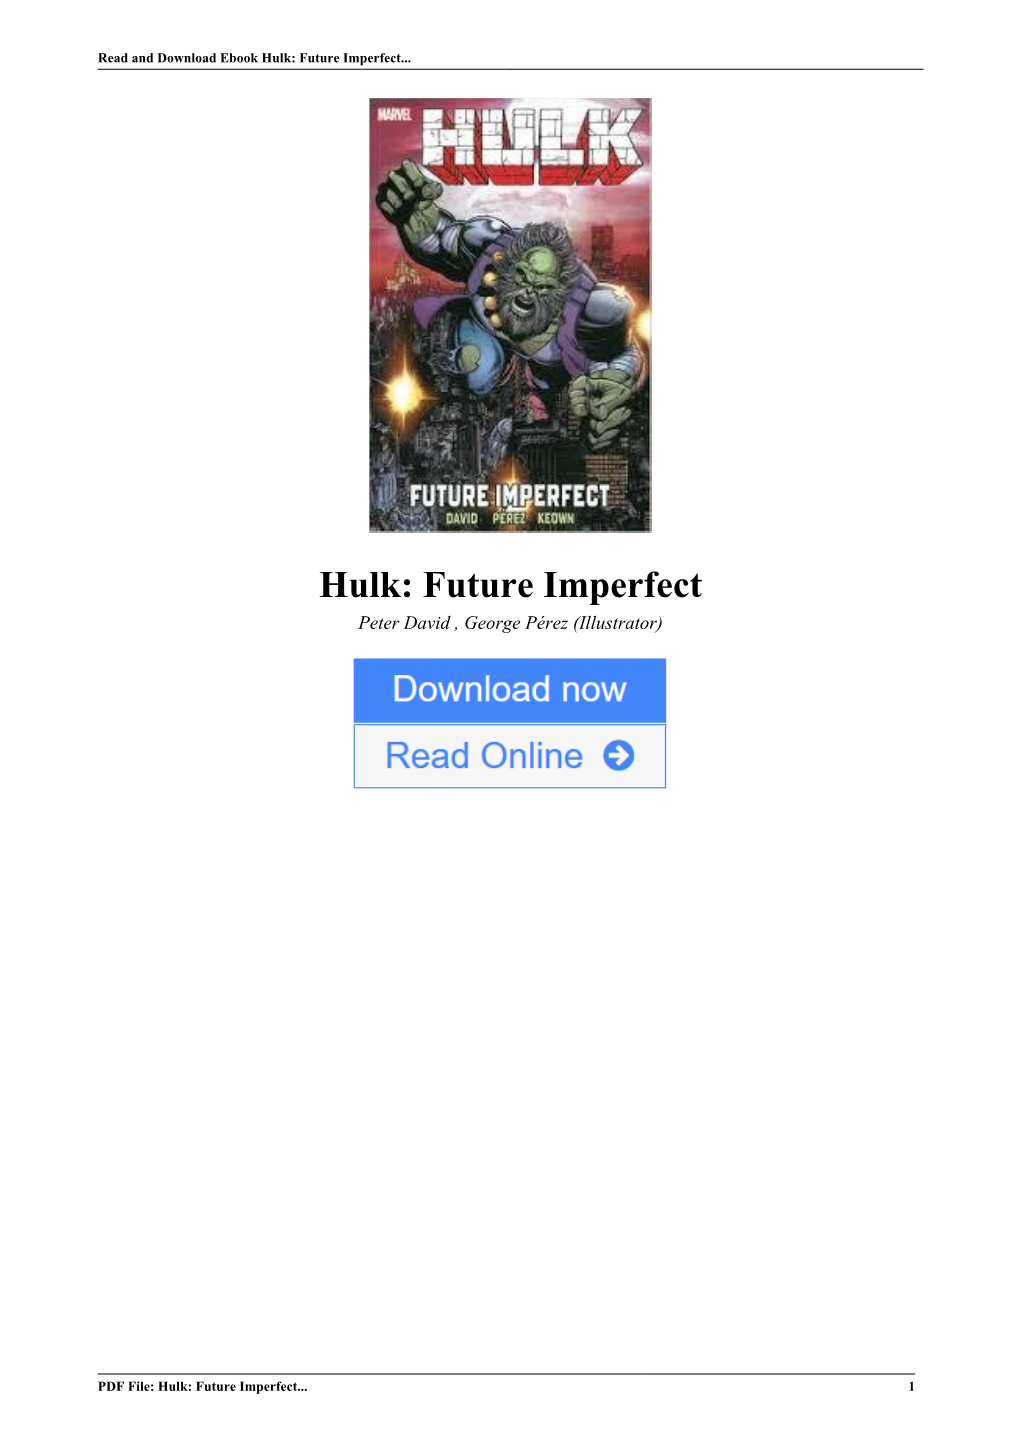 Hulk: Future Imperfect by Peter David , George Pérez (Illustrator